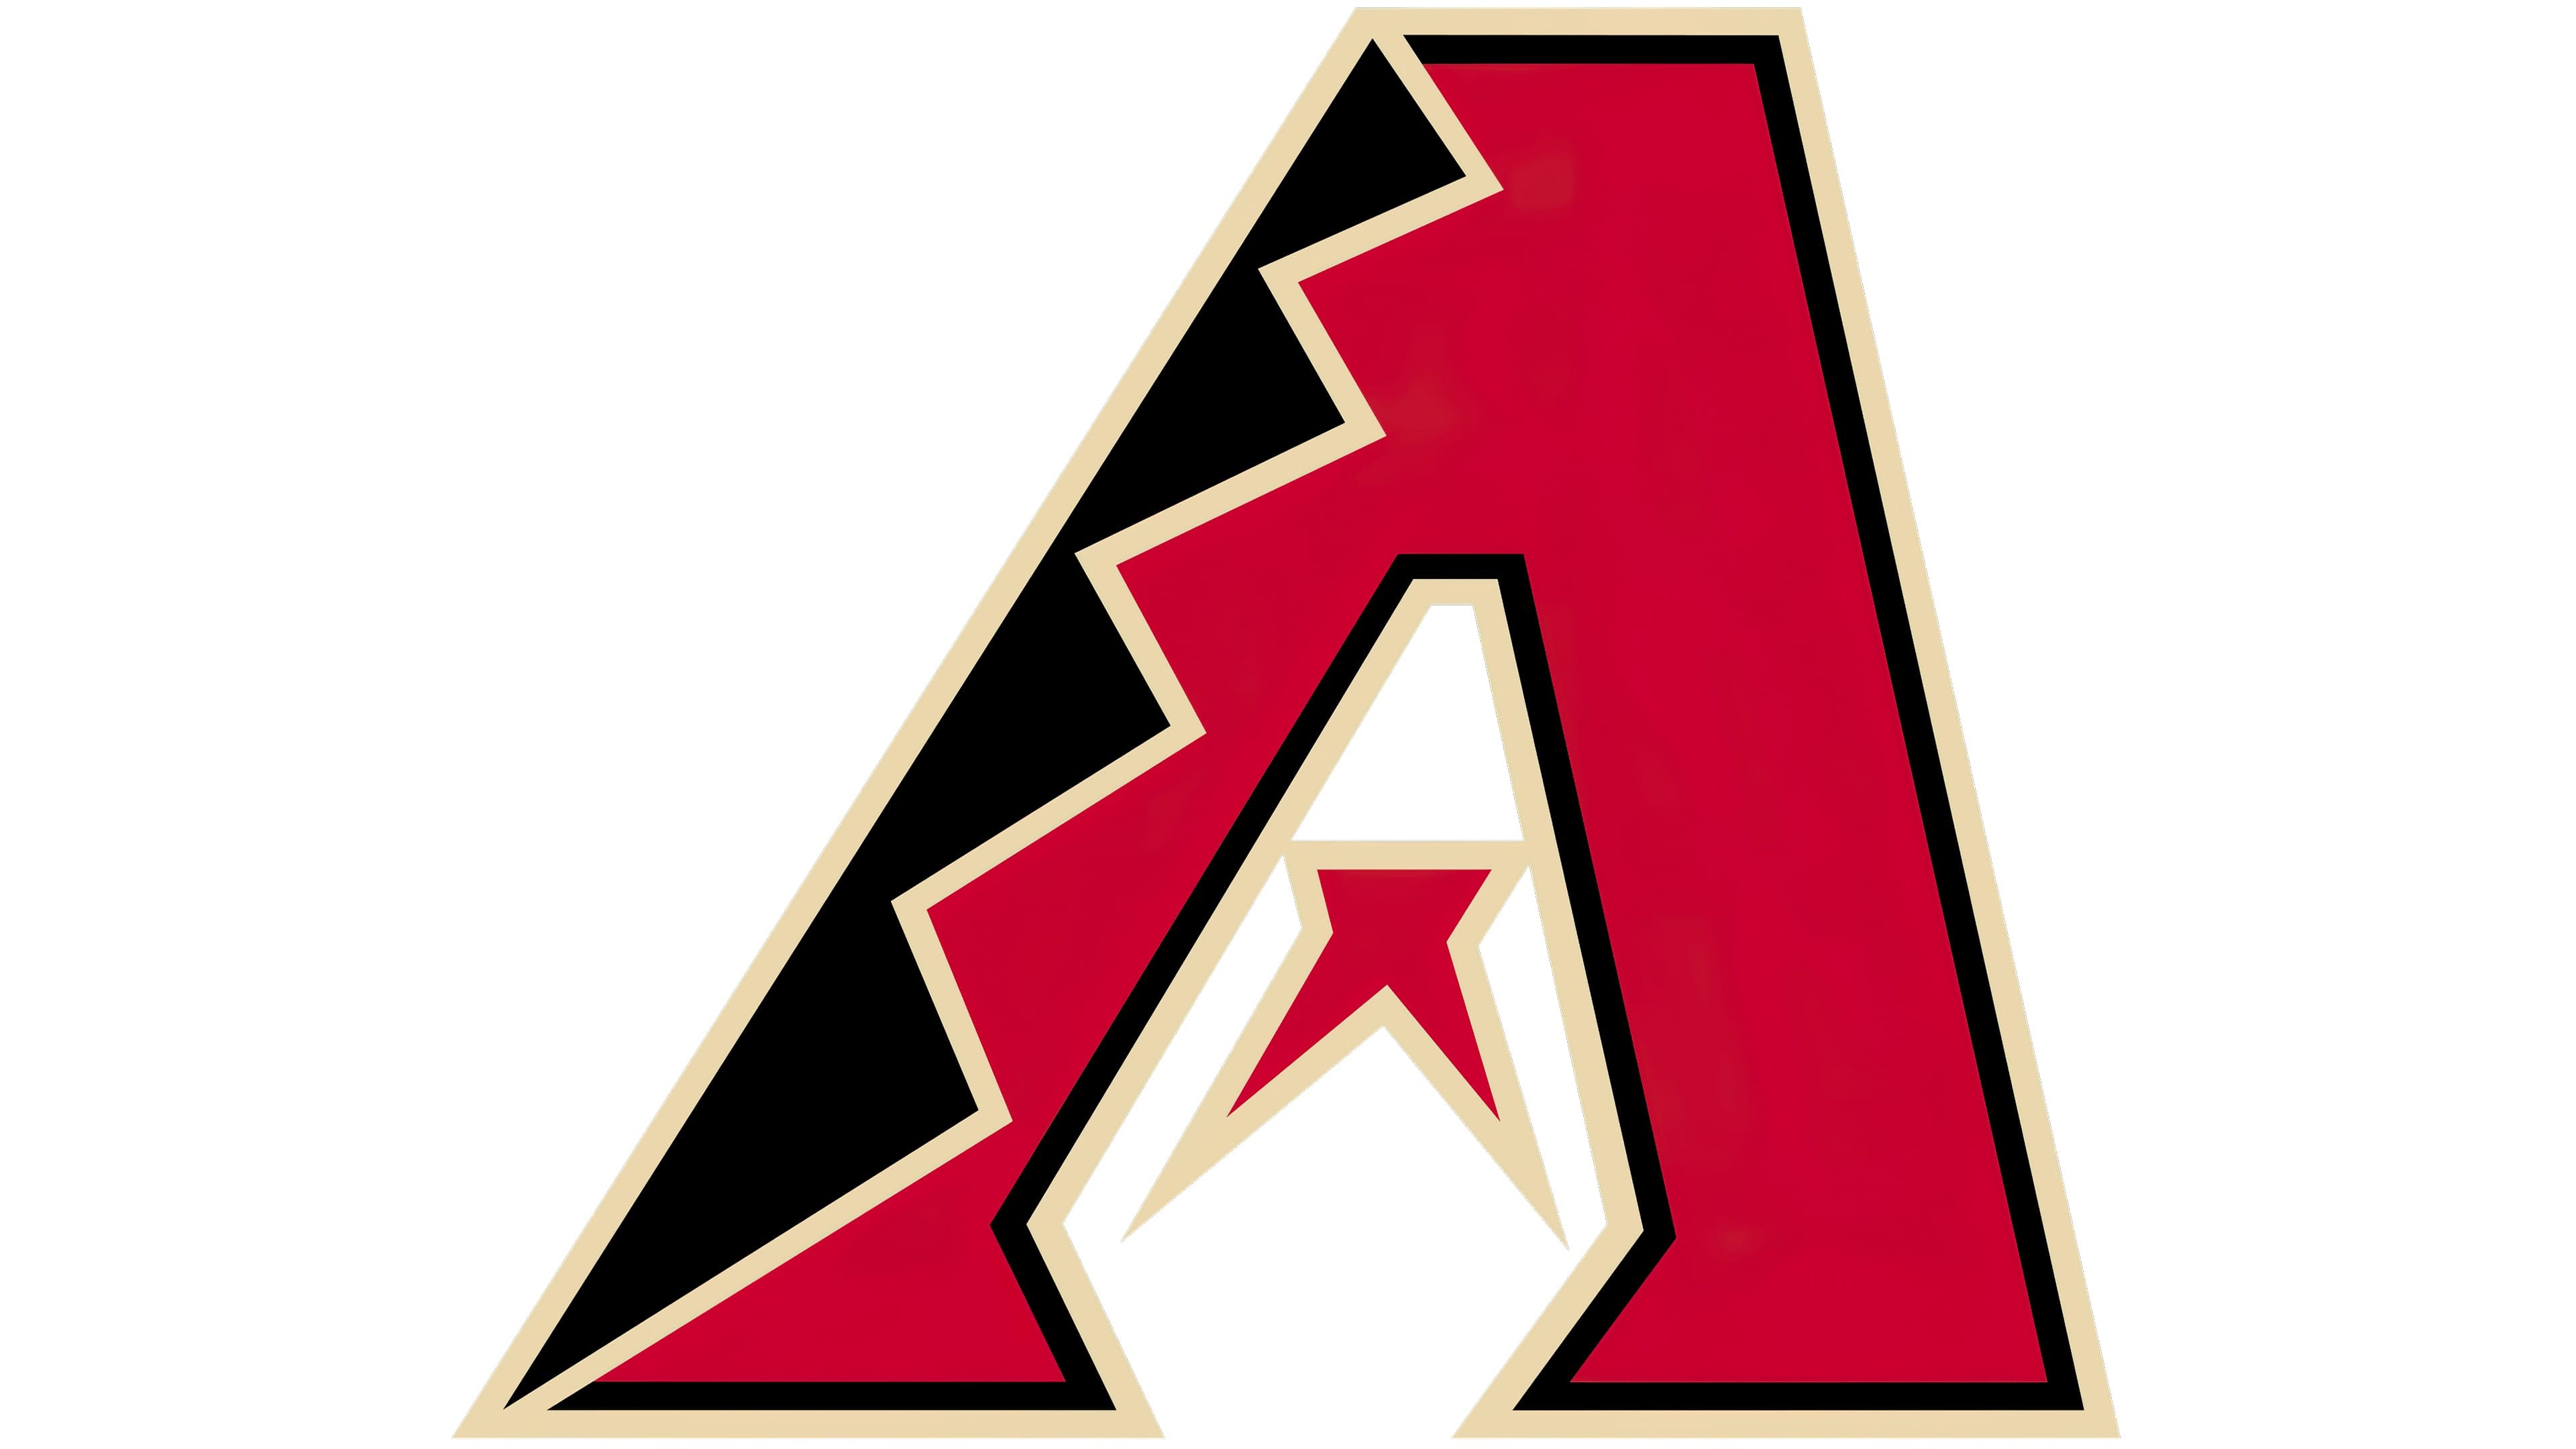 Arizona Diamondbacks Logo (Meaning and History), PNG